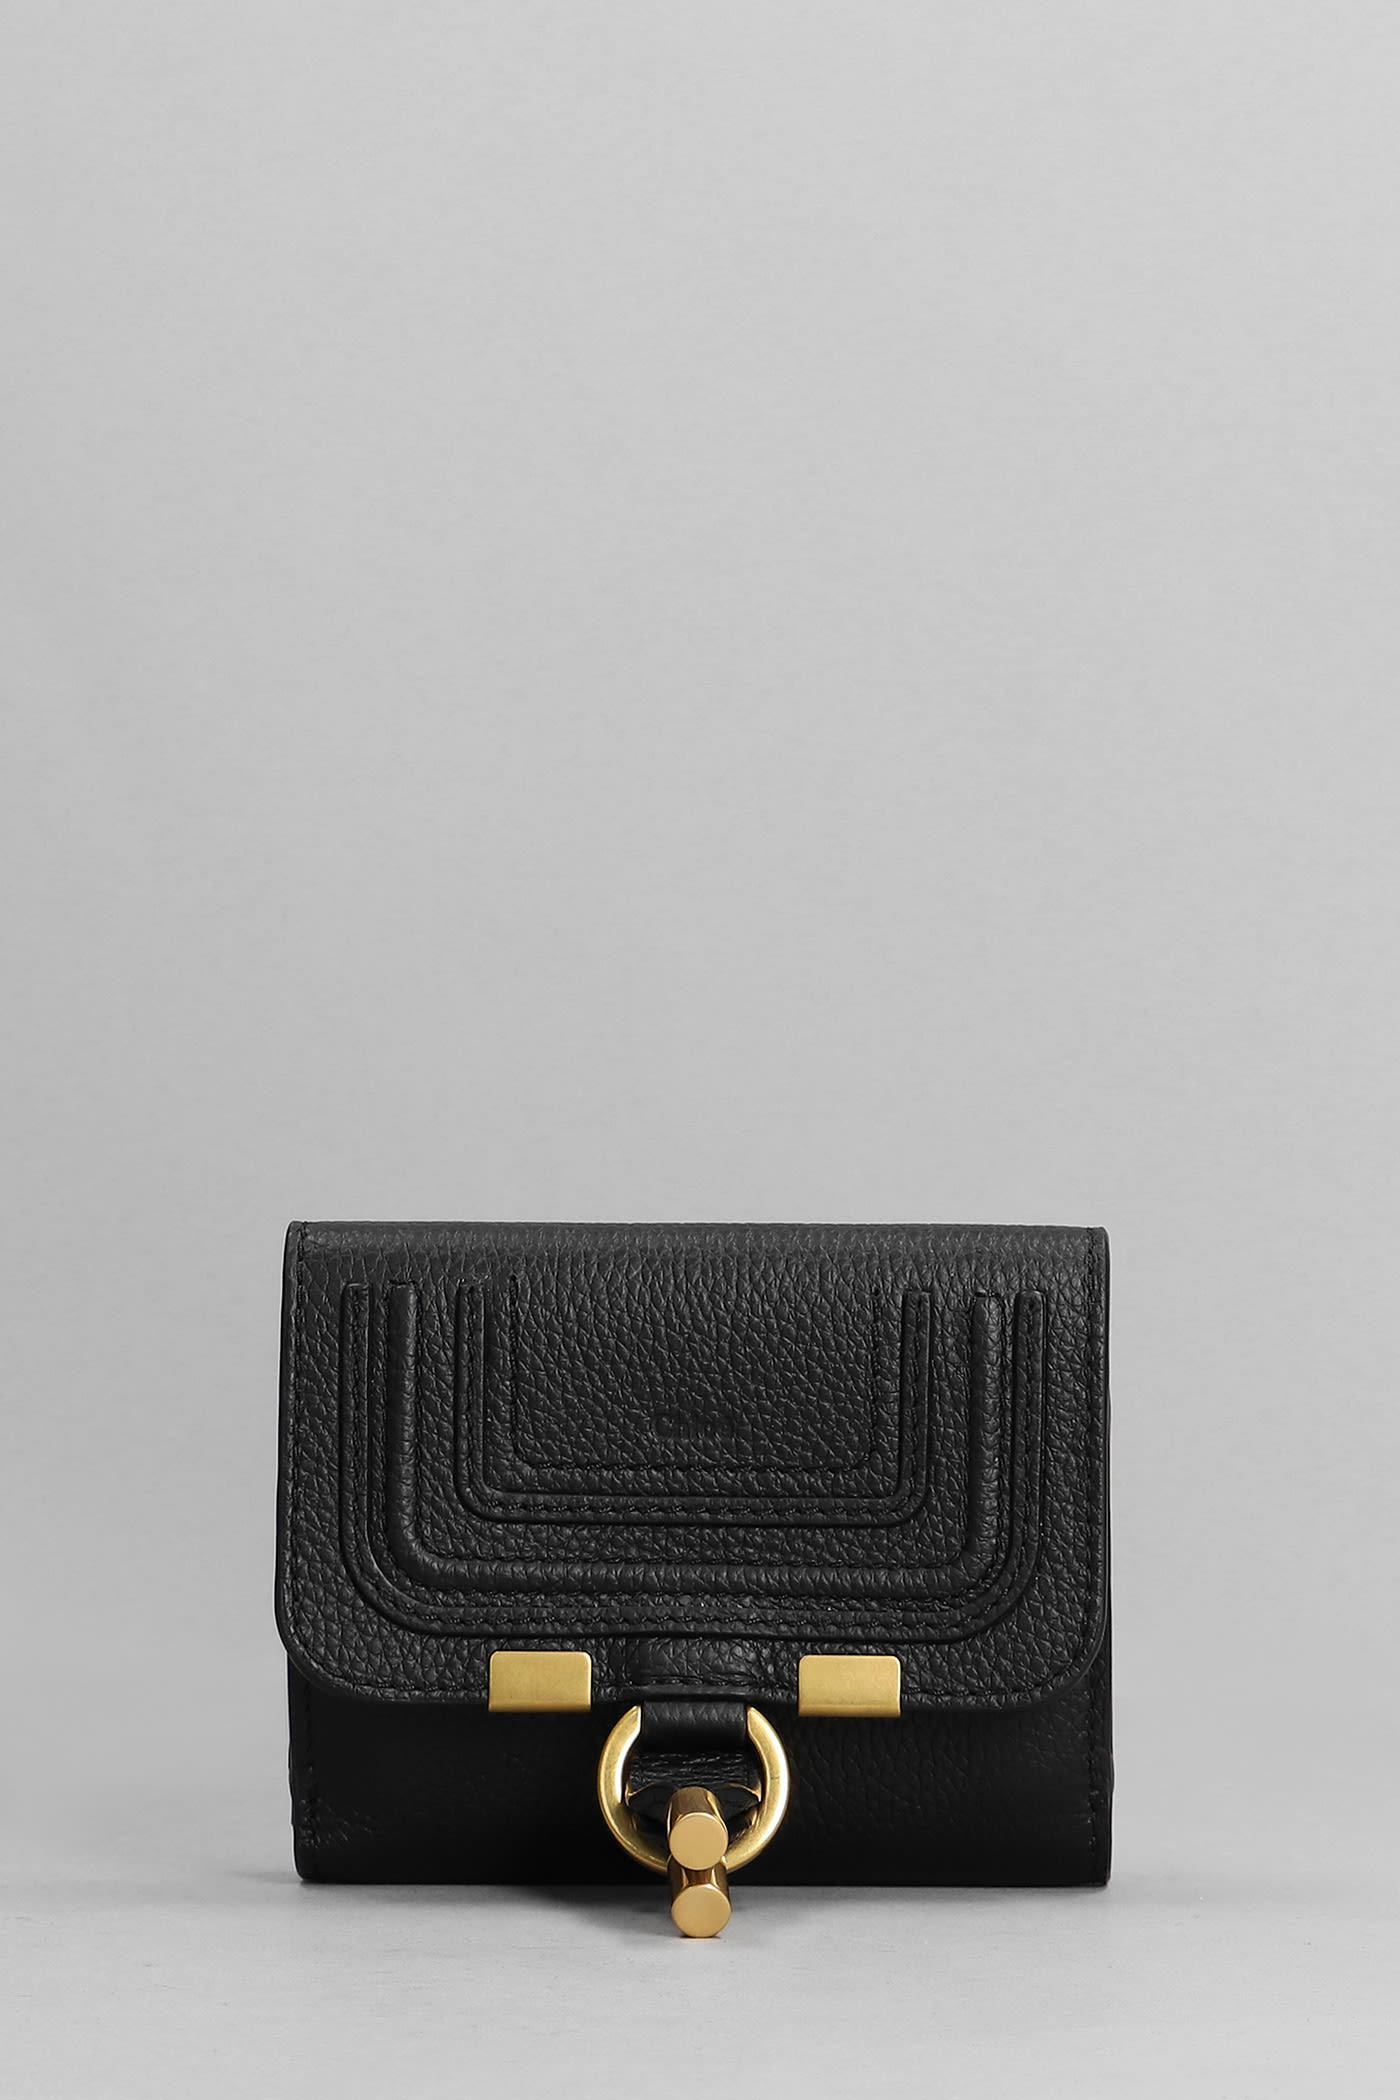 Chloé Marcie Wallet In Black Leather